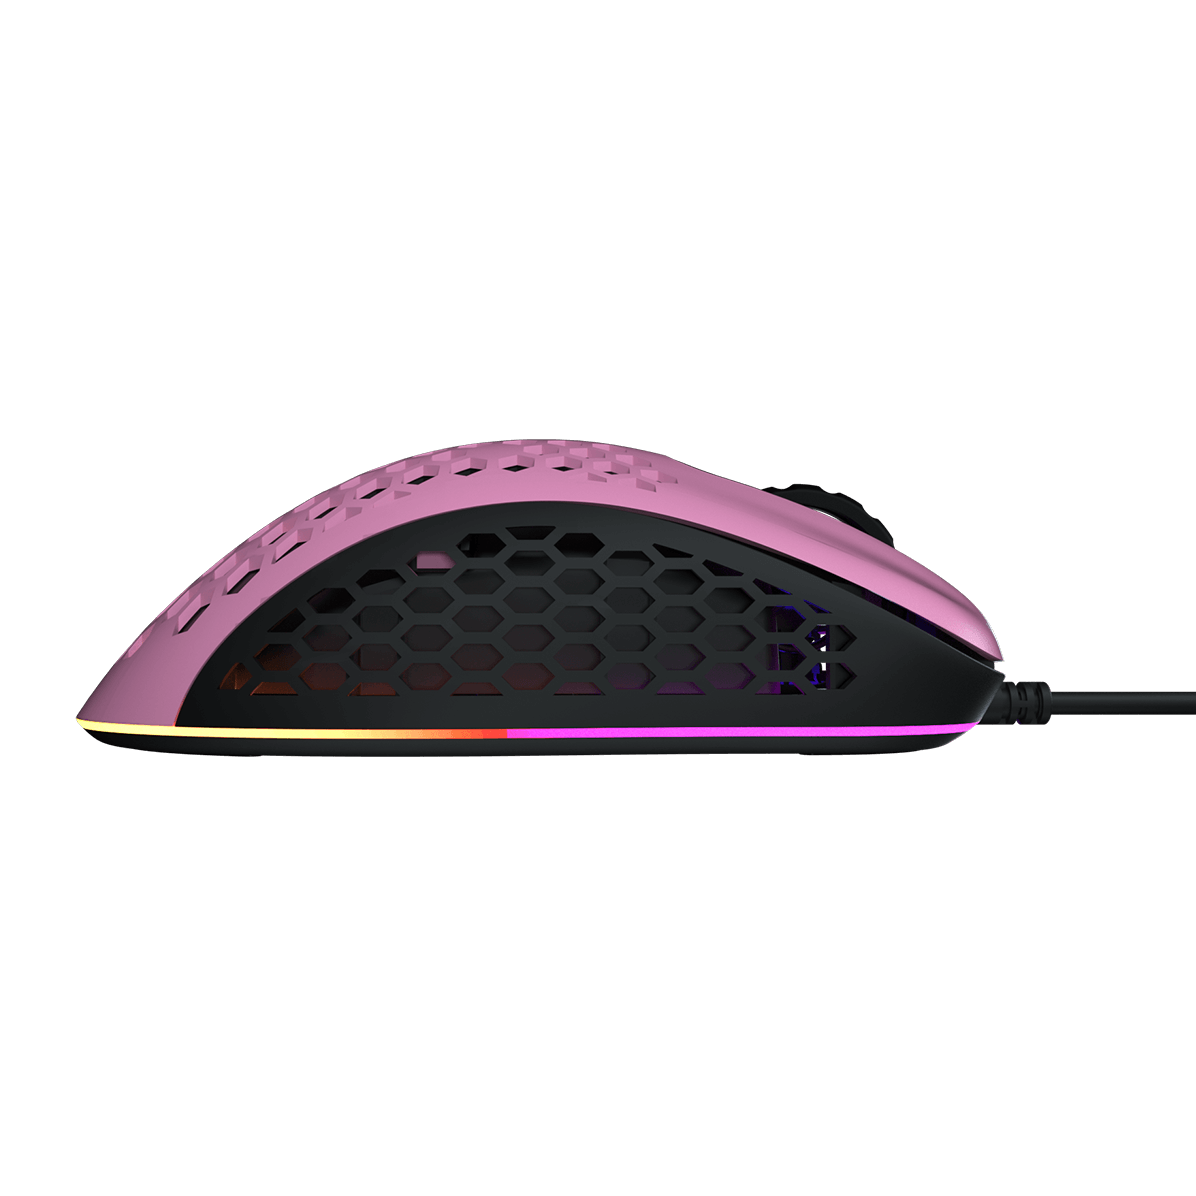 UVI Lust GALLASANDALLA lightweight gaming mouse